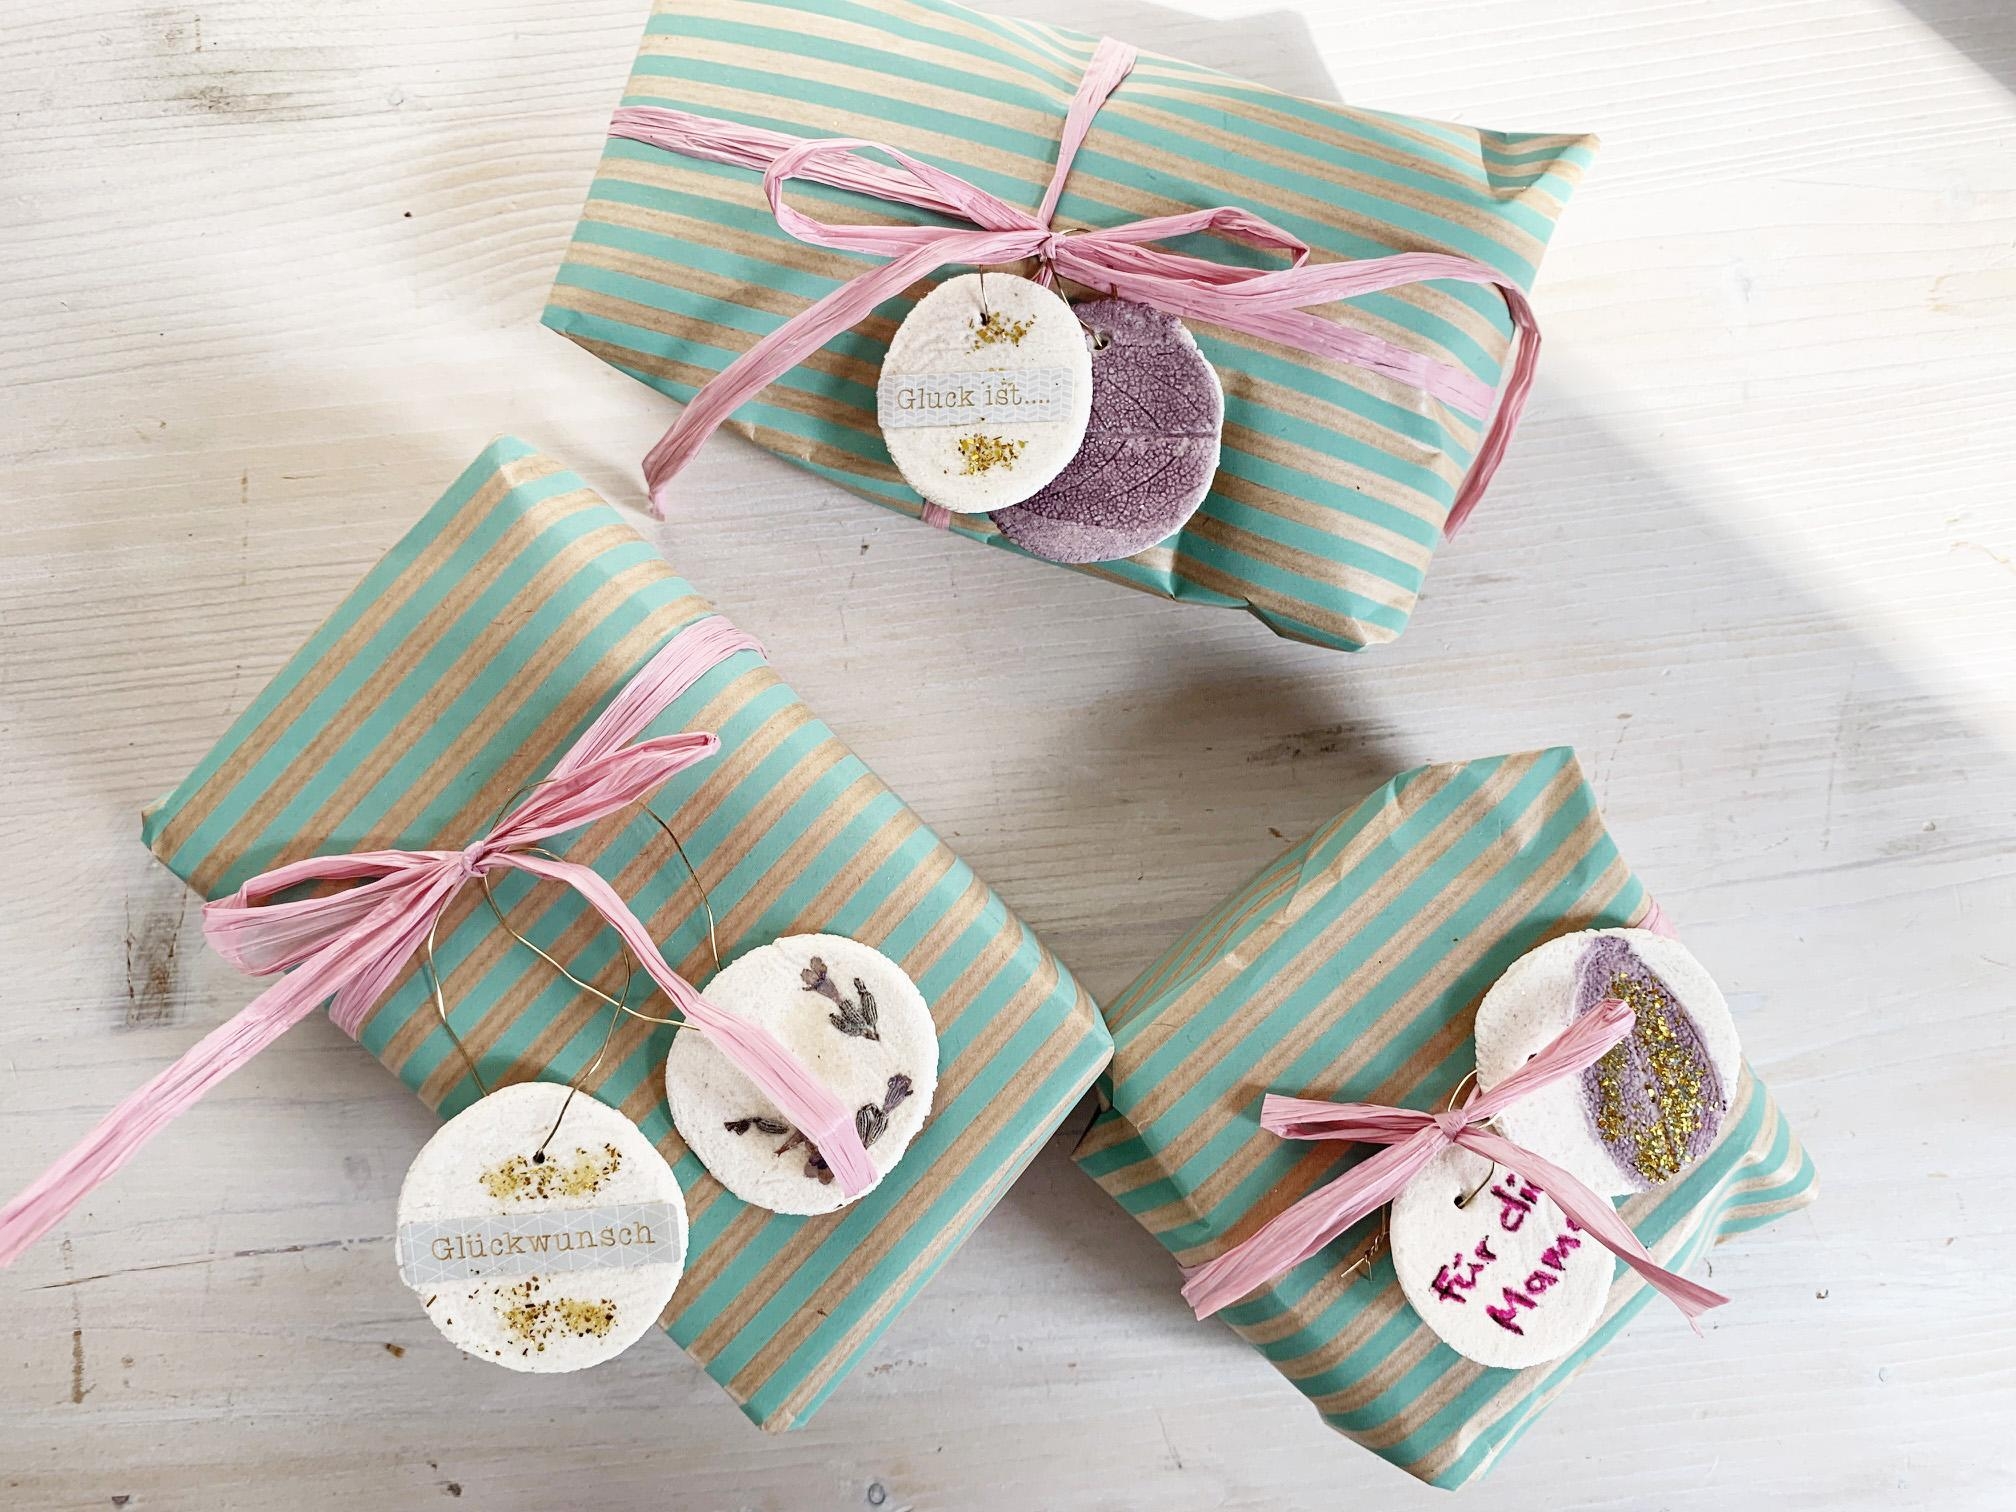 '#geschenkverpackung
Geschenkanhänger aus Salzteig - mein neuester Geschenk-Verpackungs-Tipp